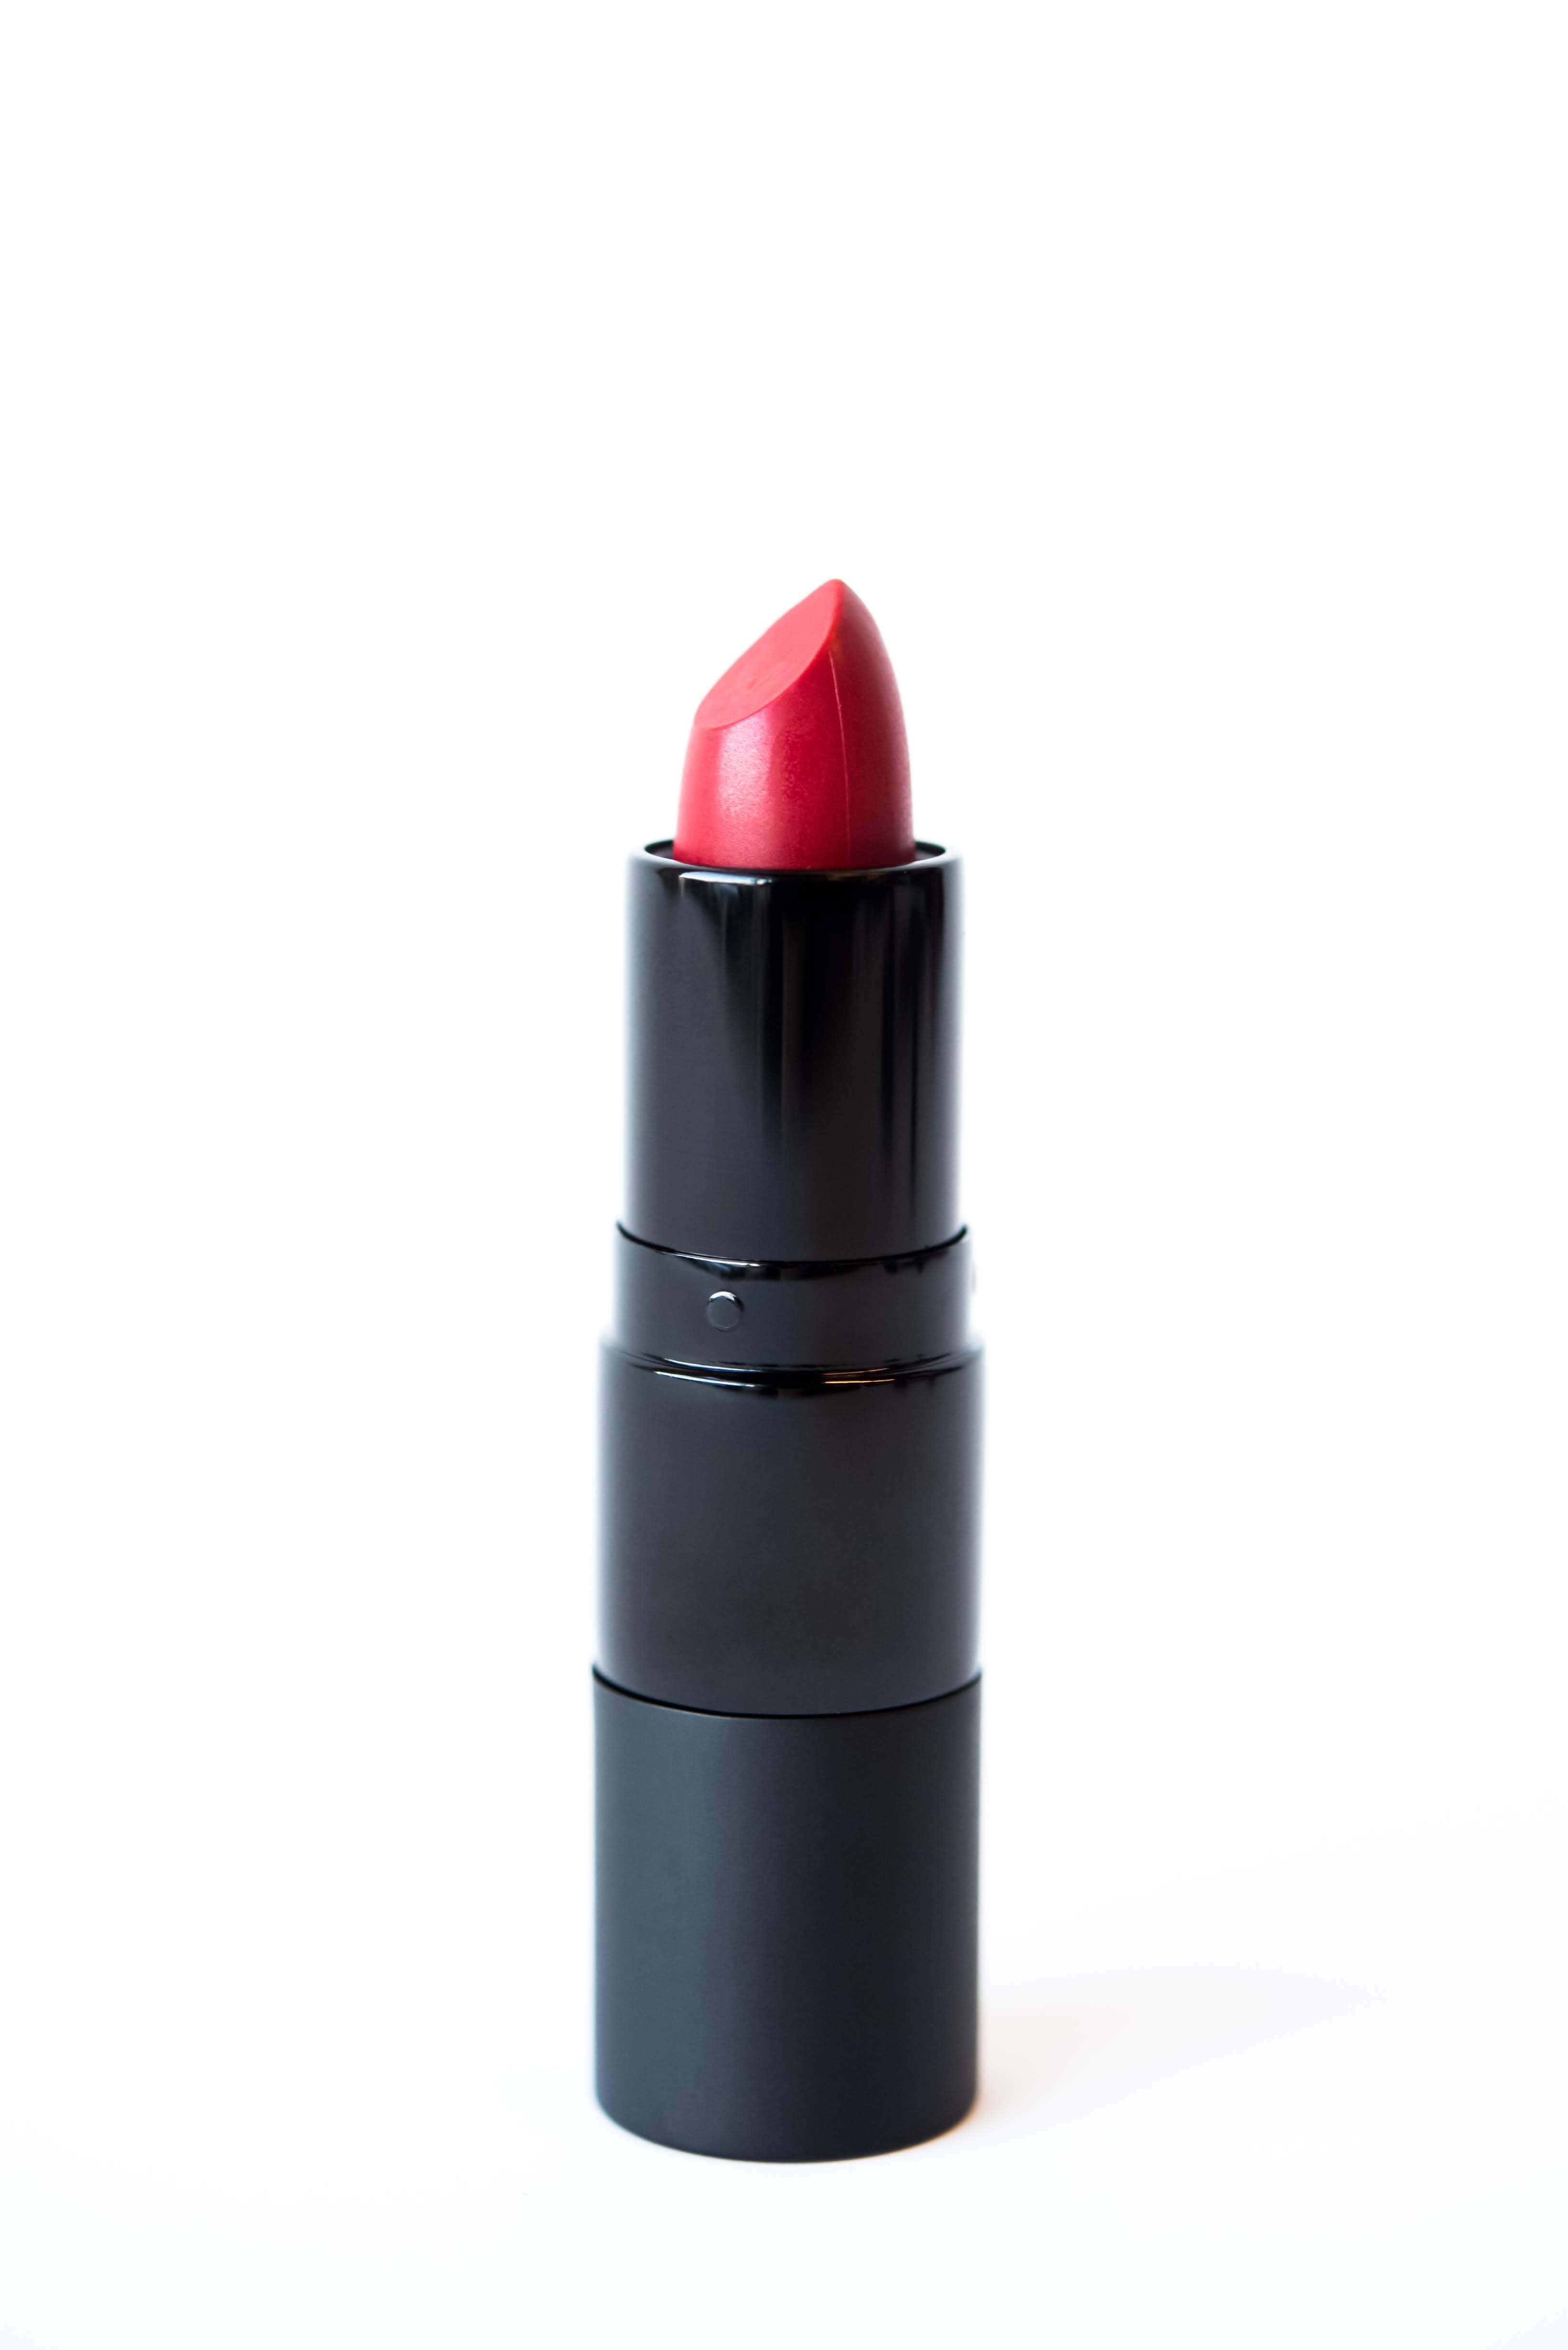 P005 Strut Makeup Cream Lipstick